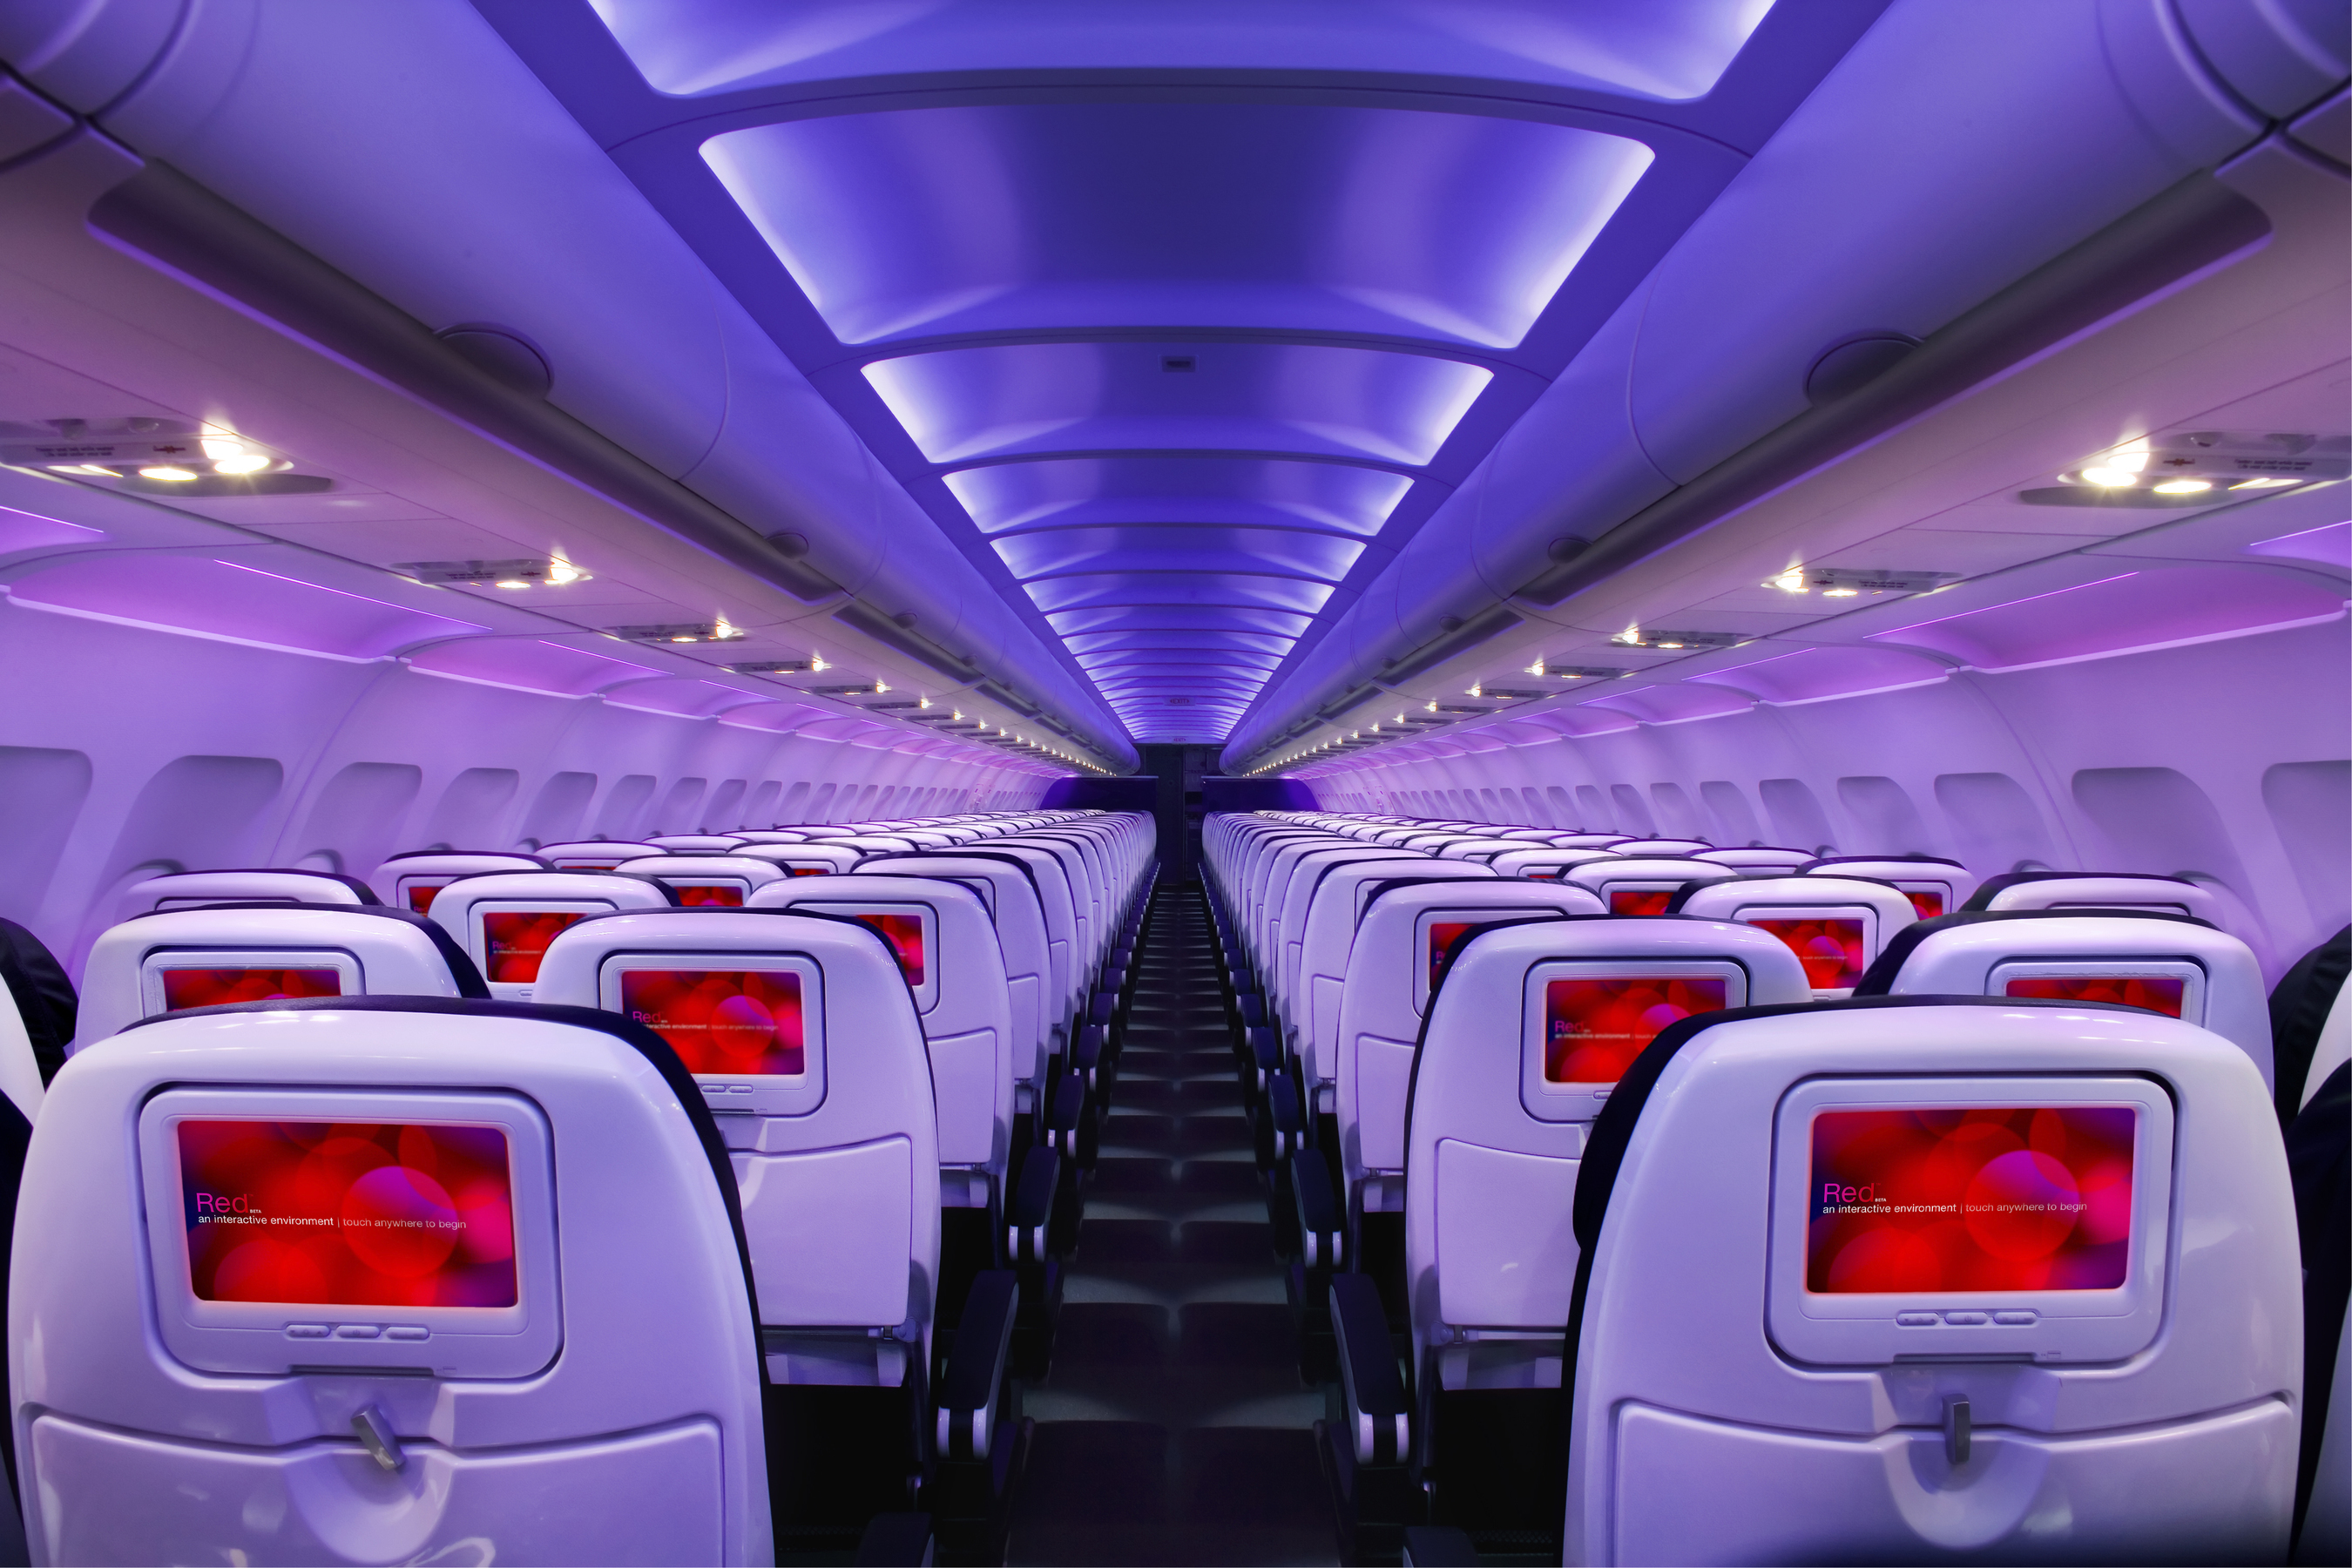 VIRGIN AMERICA LANDS LOVE: AIRLINE BRINGS NEW BUSINESS-FRIENDLY FLIGHTS TO DALLAS' LOVE FIELD (PRNewsFoto/Virgin America)